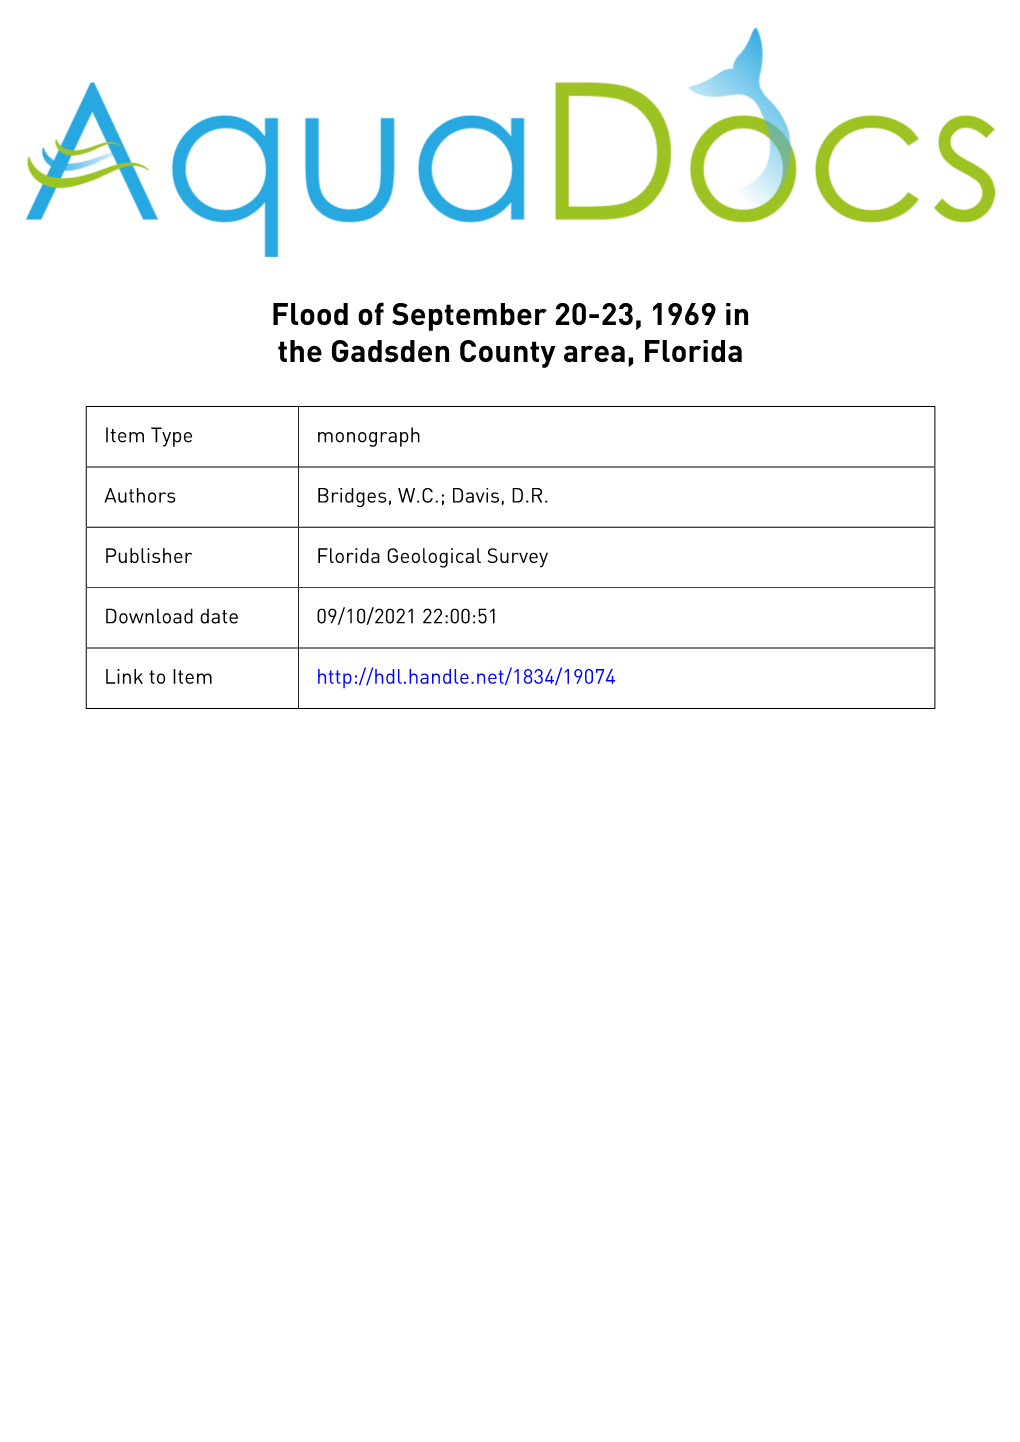 Flood of September 20-23, 1969 in the Gadsden County Area, Florida